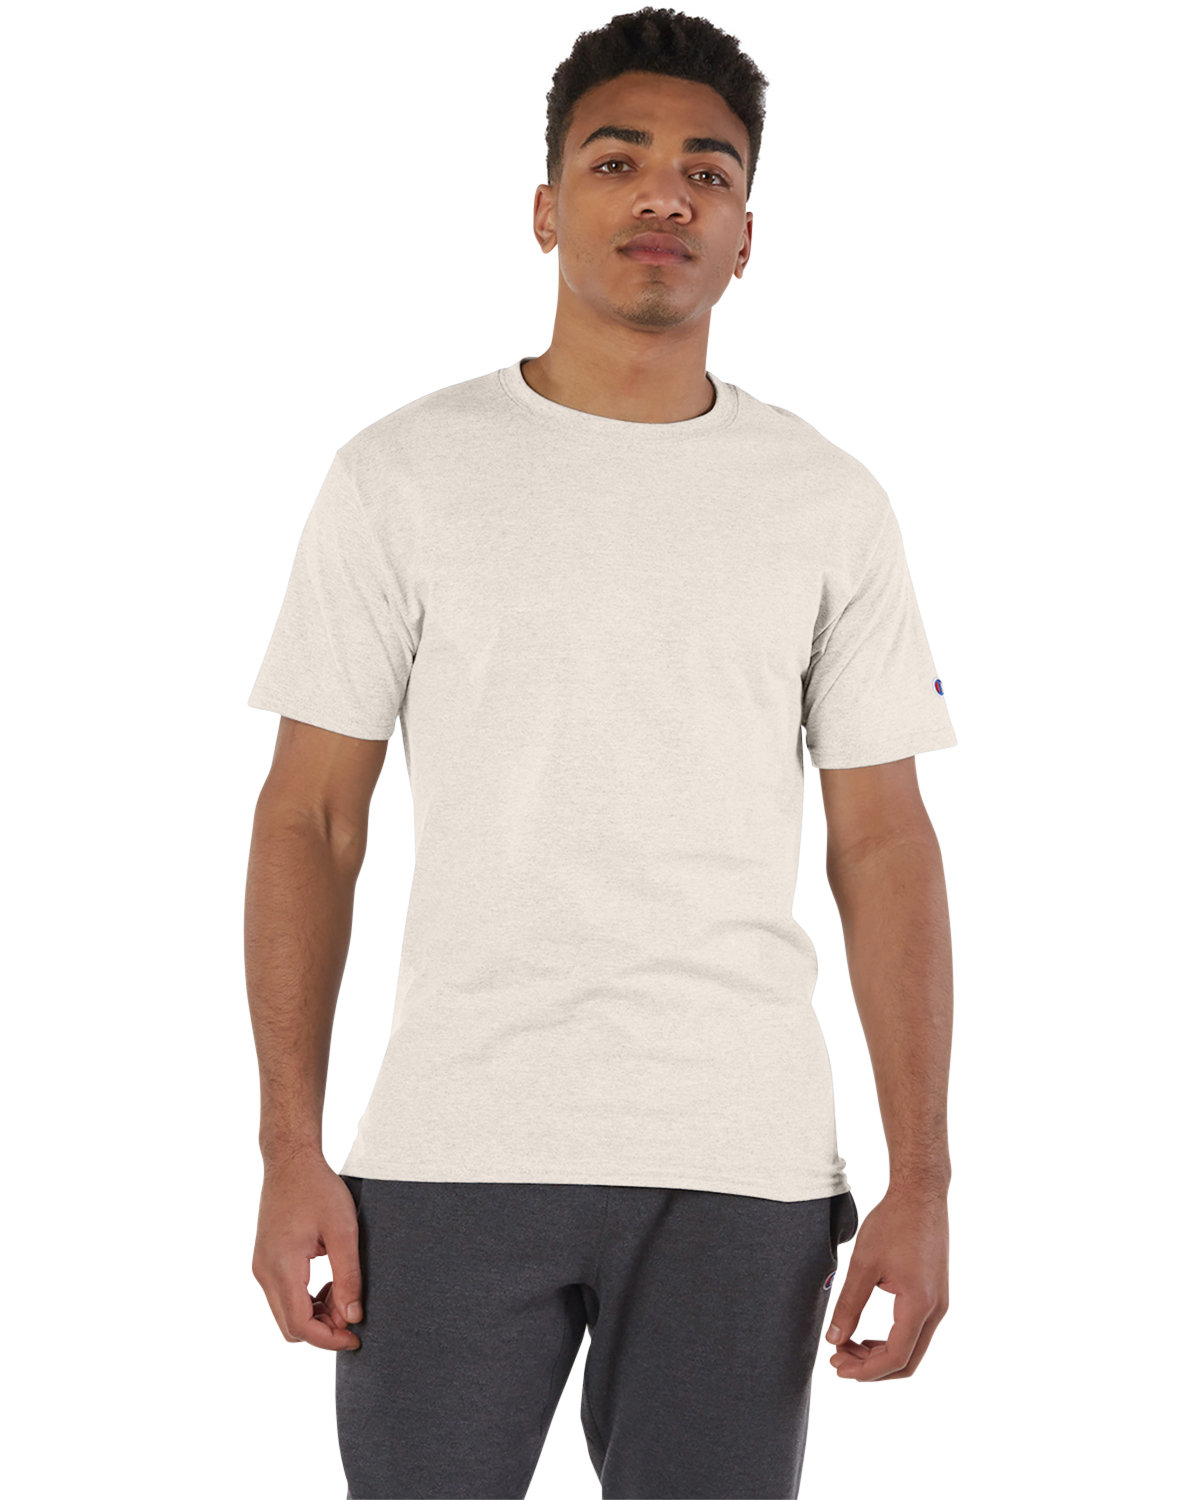 Champion T425 Short Sleeve Tagless T-Shirt $5.98 - T-Shirts